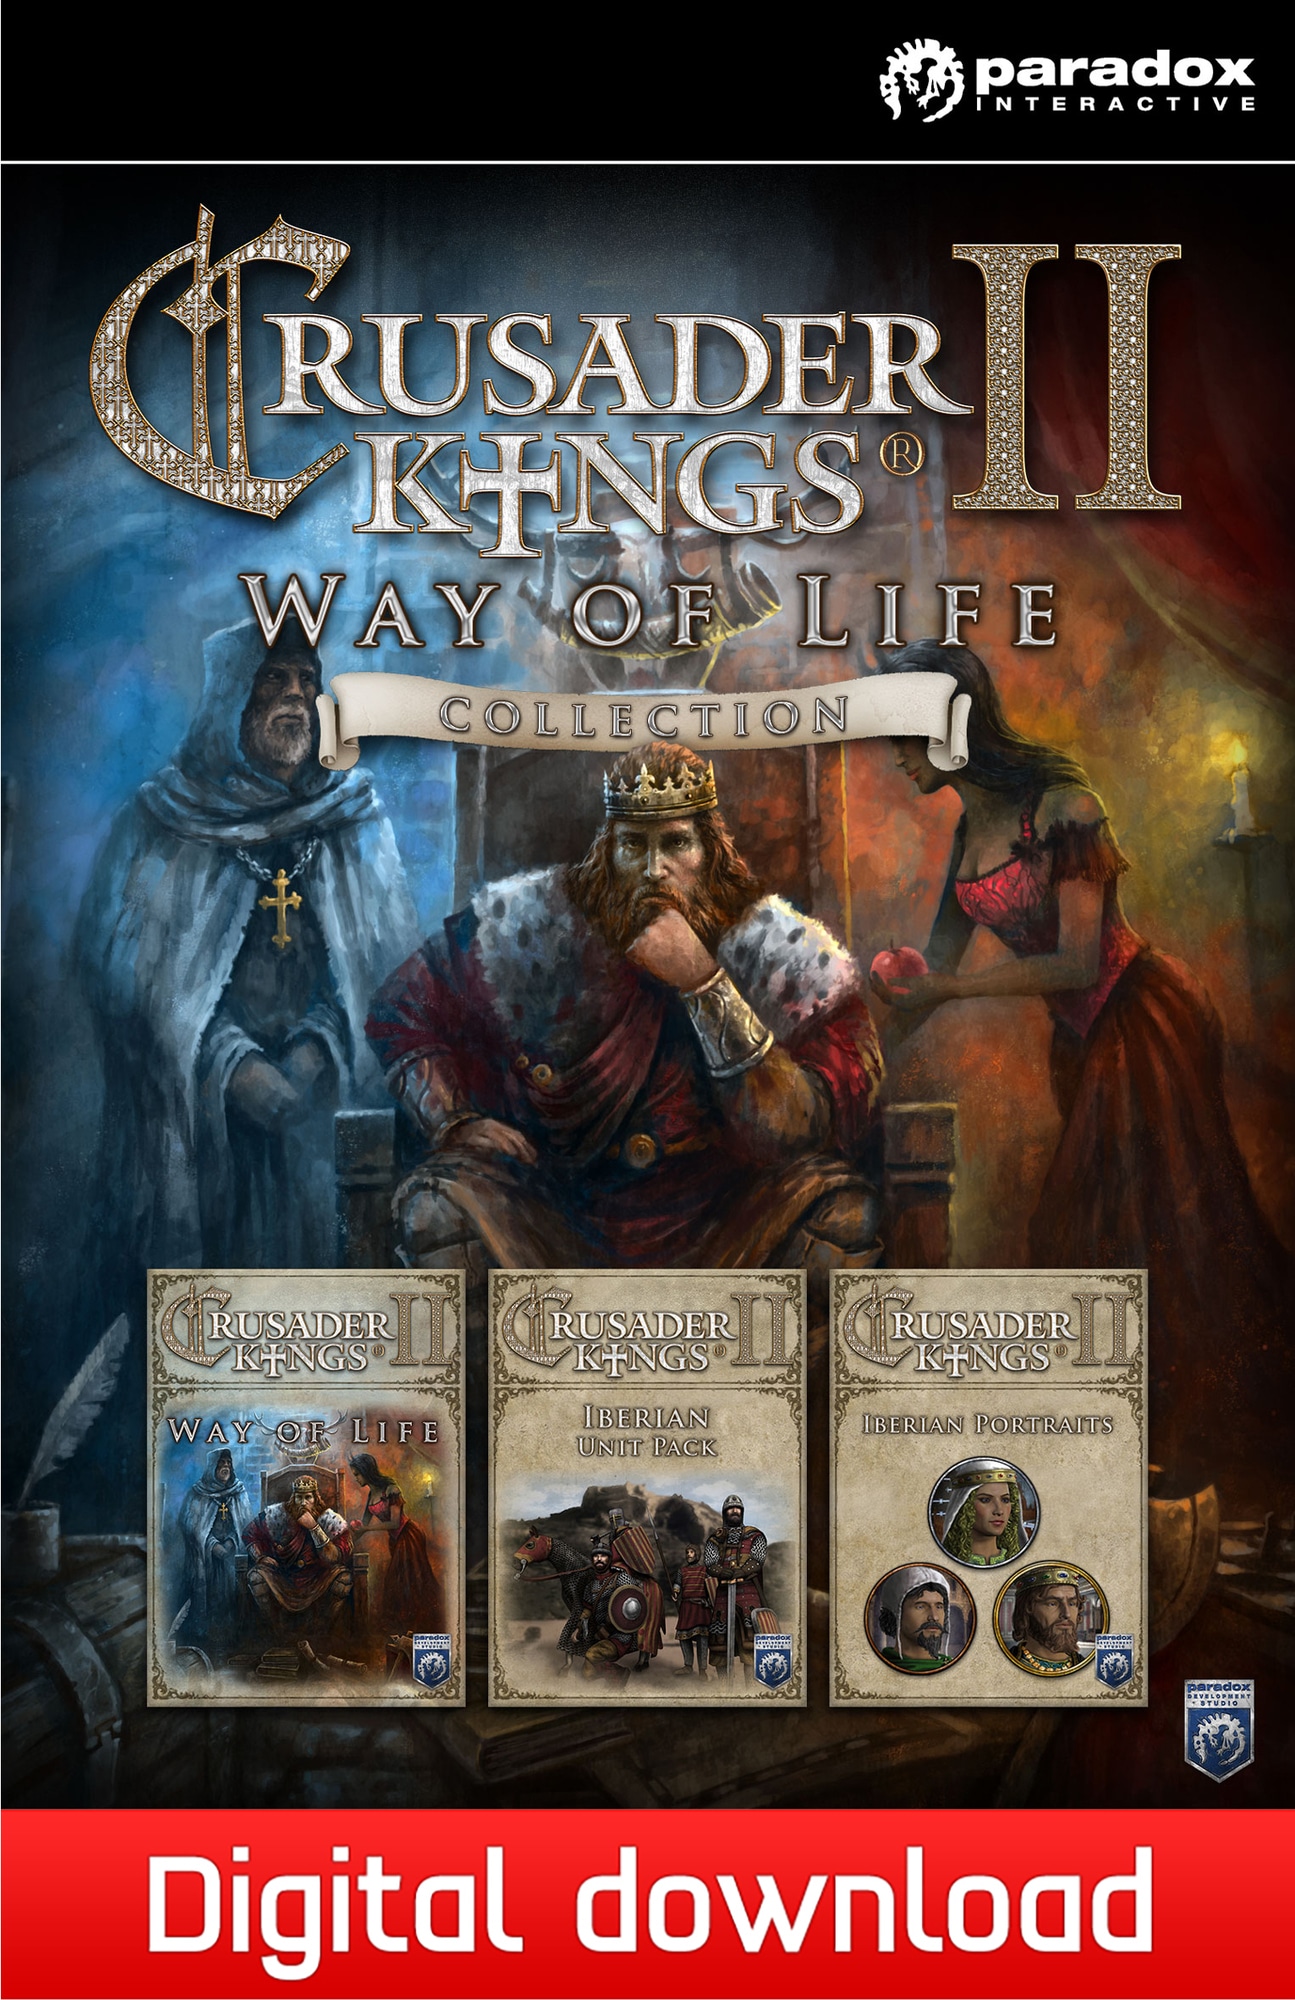 Crusader Kings II: Way of Life Collection - PC Windows,Mac OSX,Linux